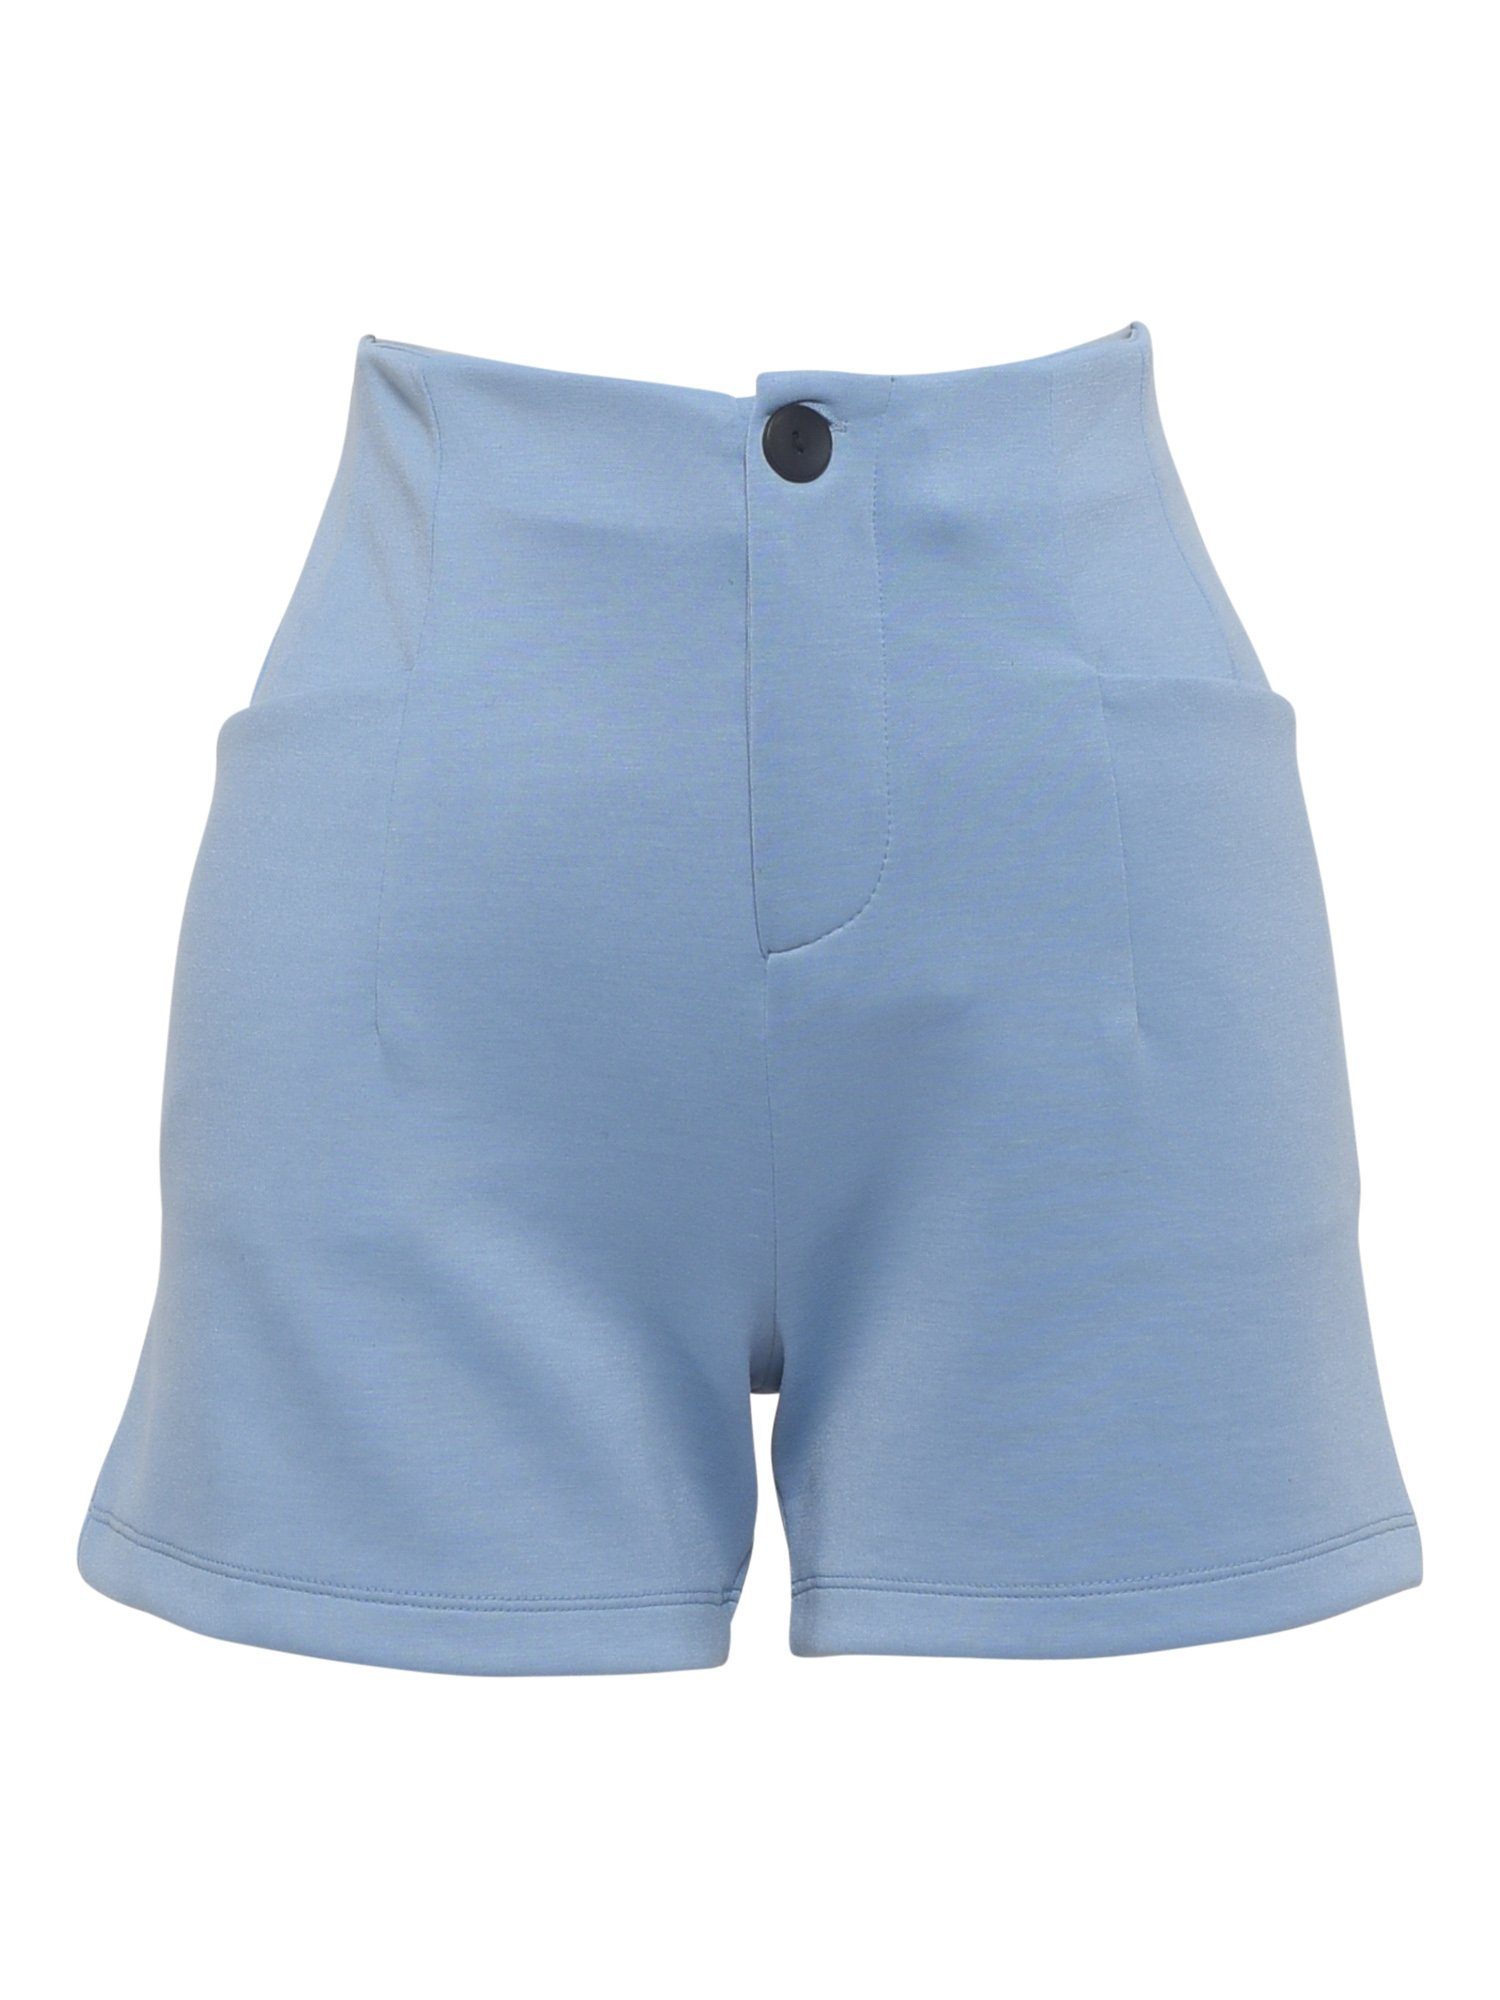 'Wilma' Freshlions Shorts blau Shorts